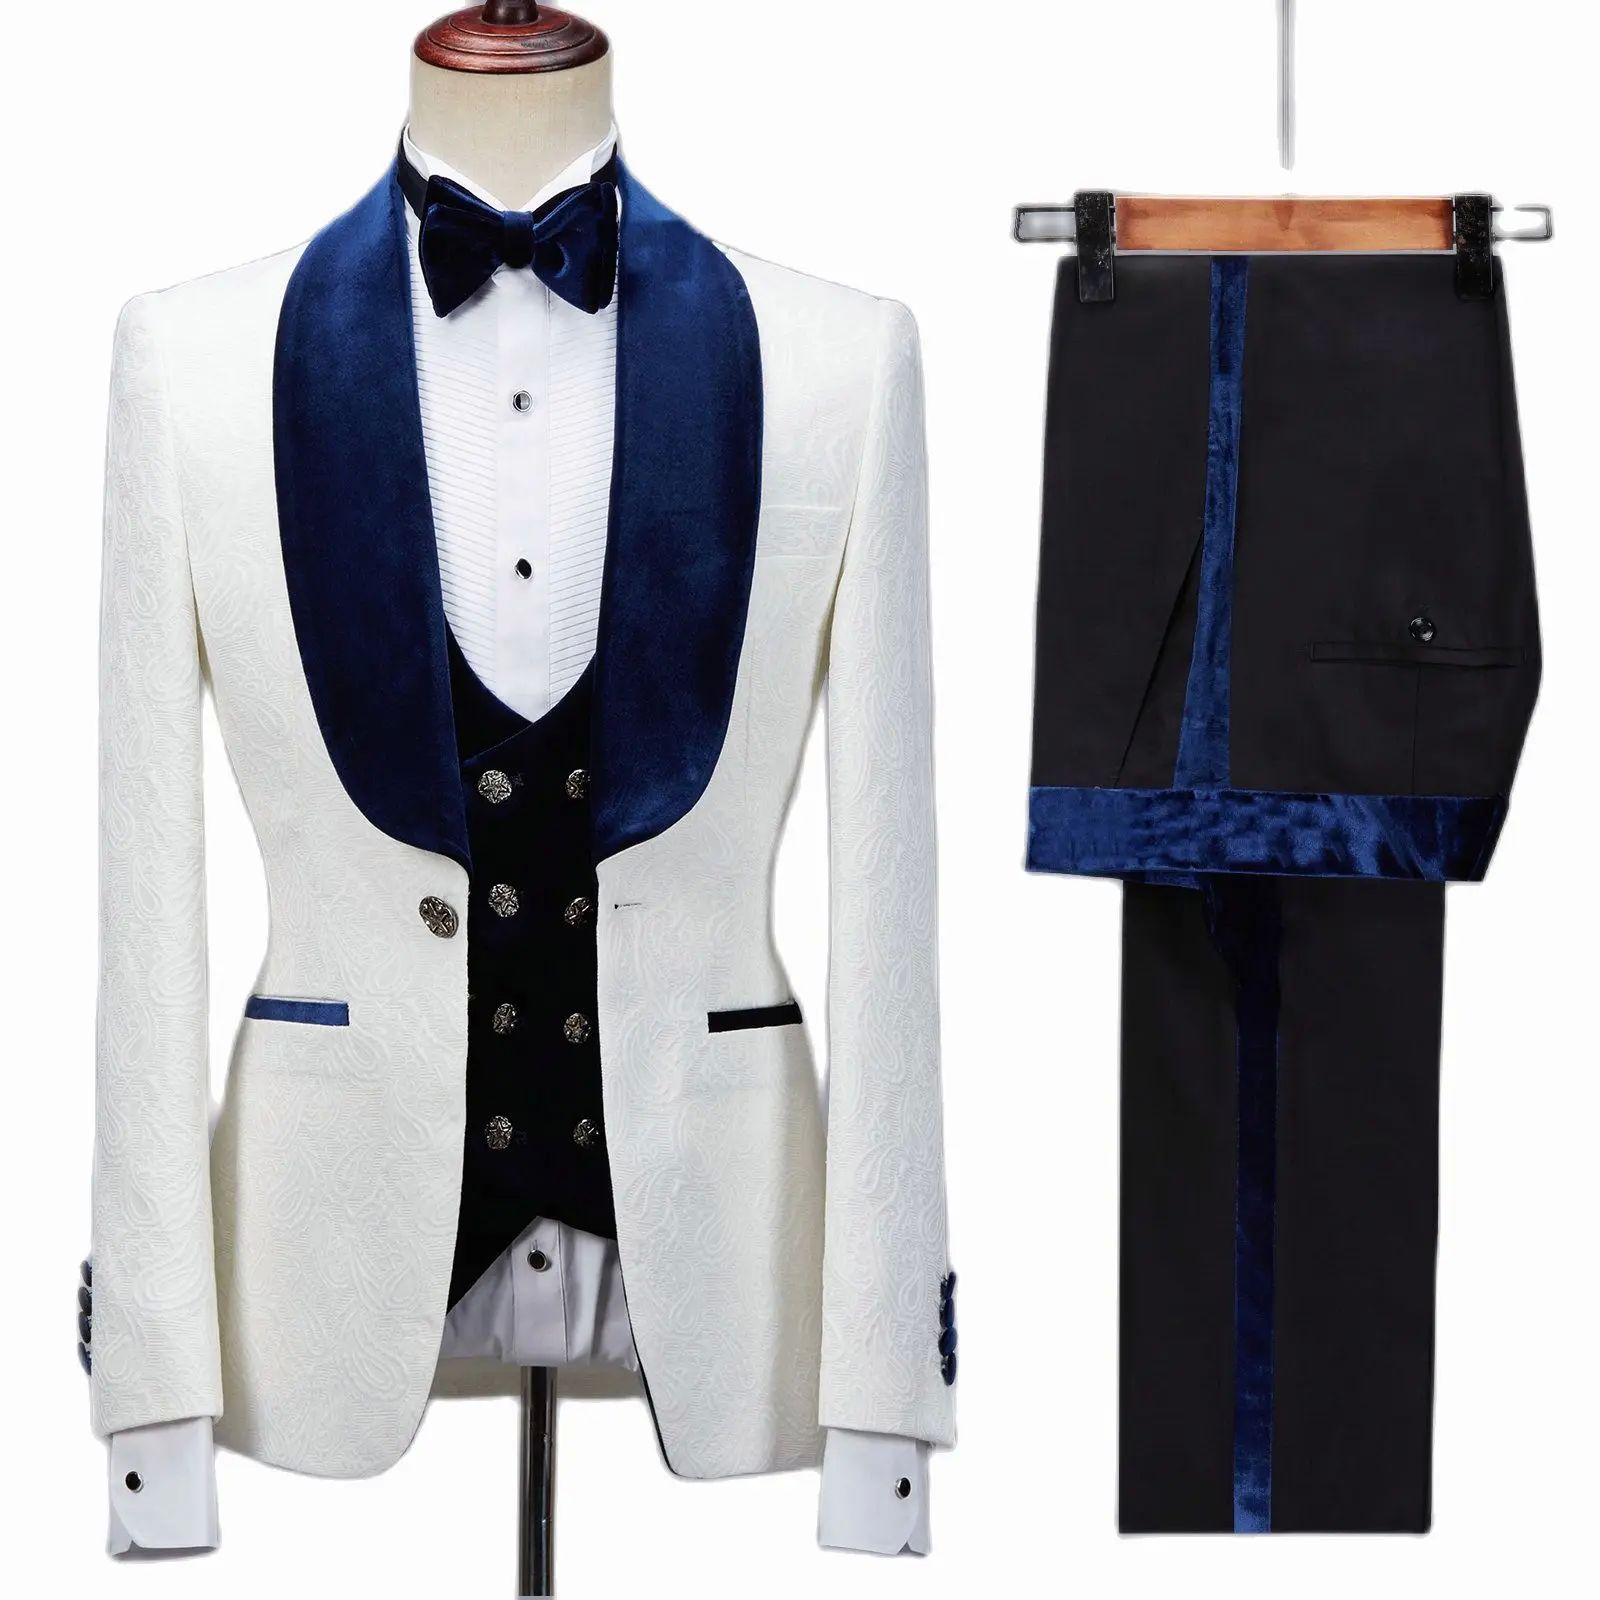 Floral Jacket Men Suit Slim Fit Wedding Tuxedo Navy Blue Vel - 图1